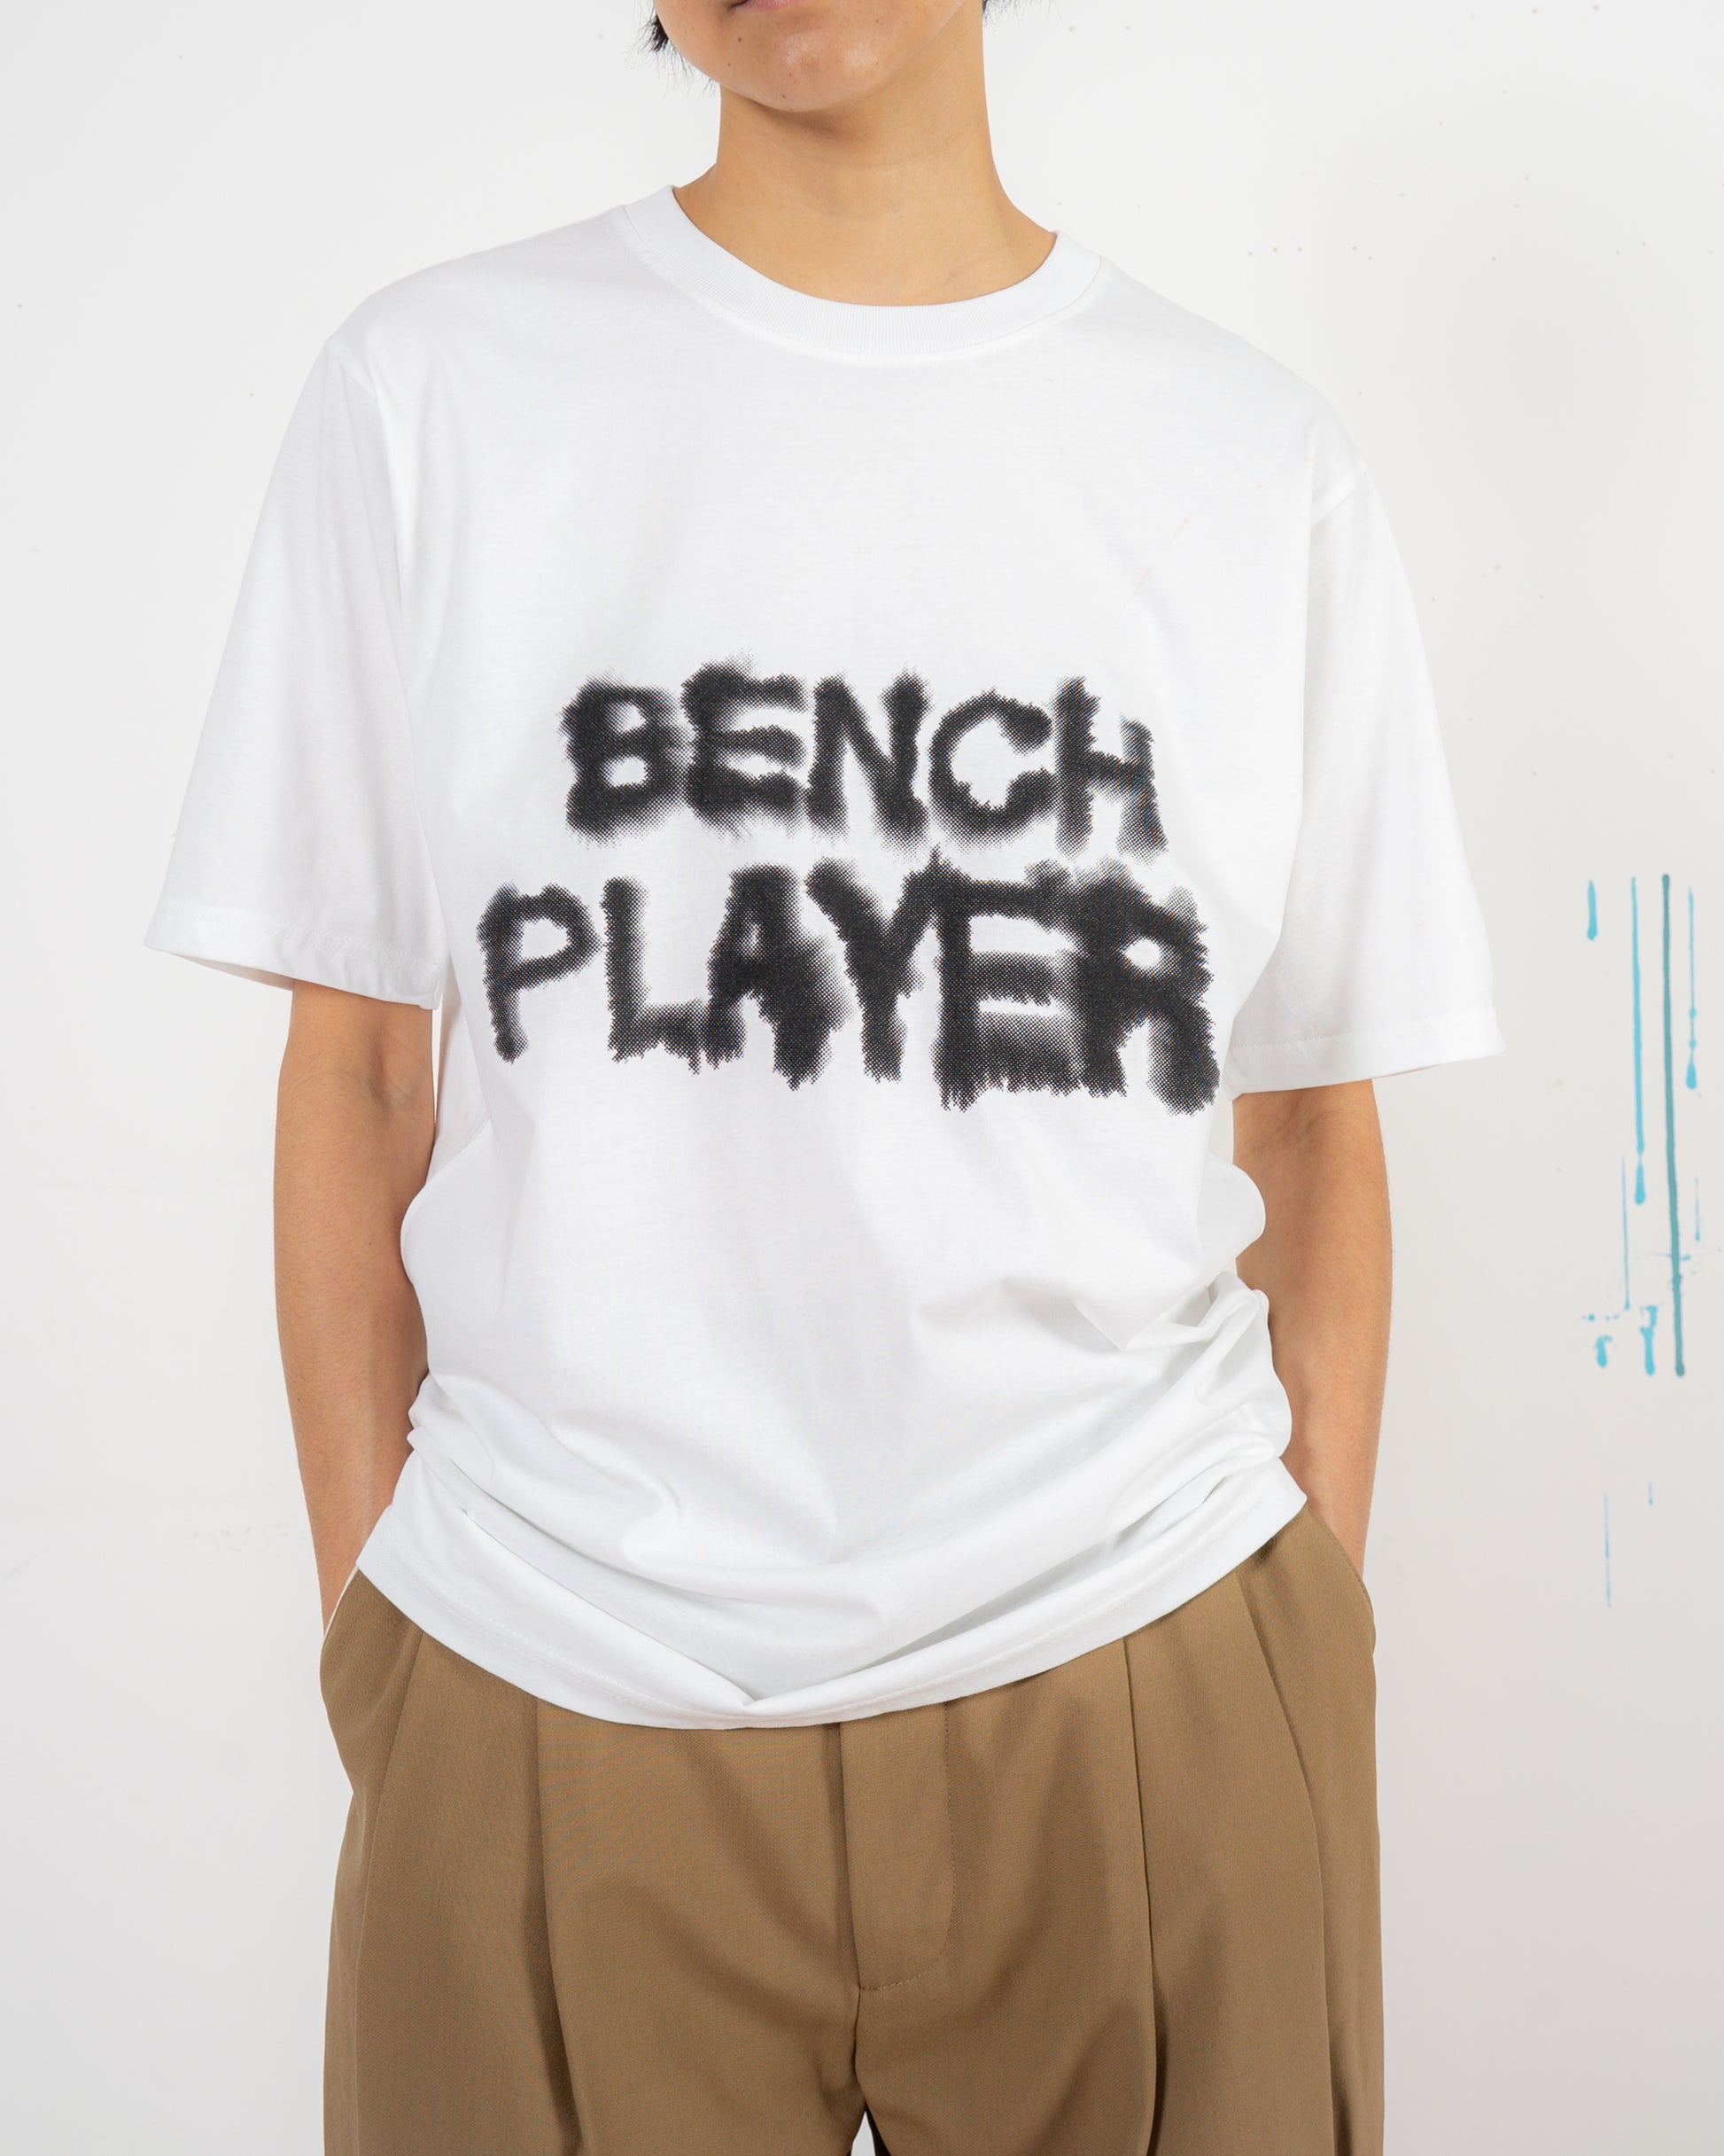 Bench Player Helvetica T-Shirt by Rop van Mierlo – Wild Animals